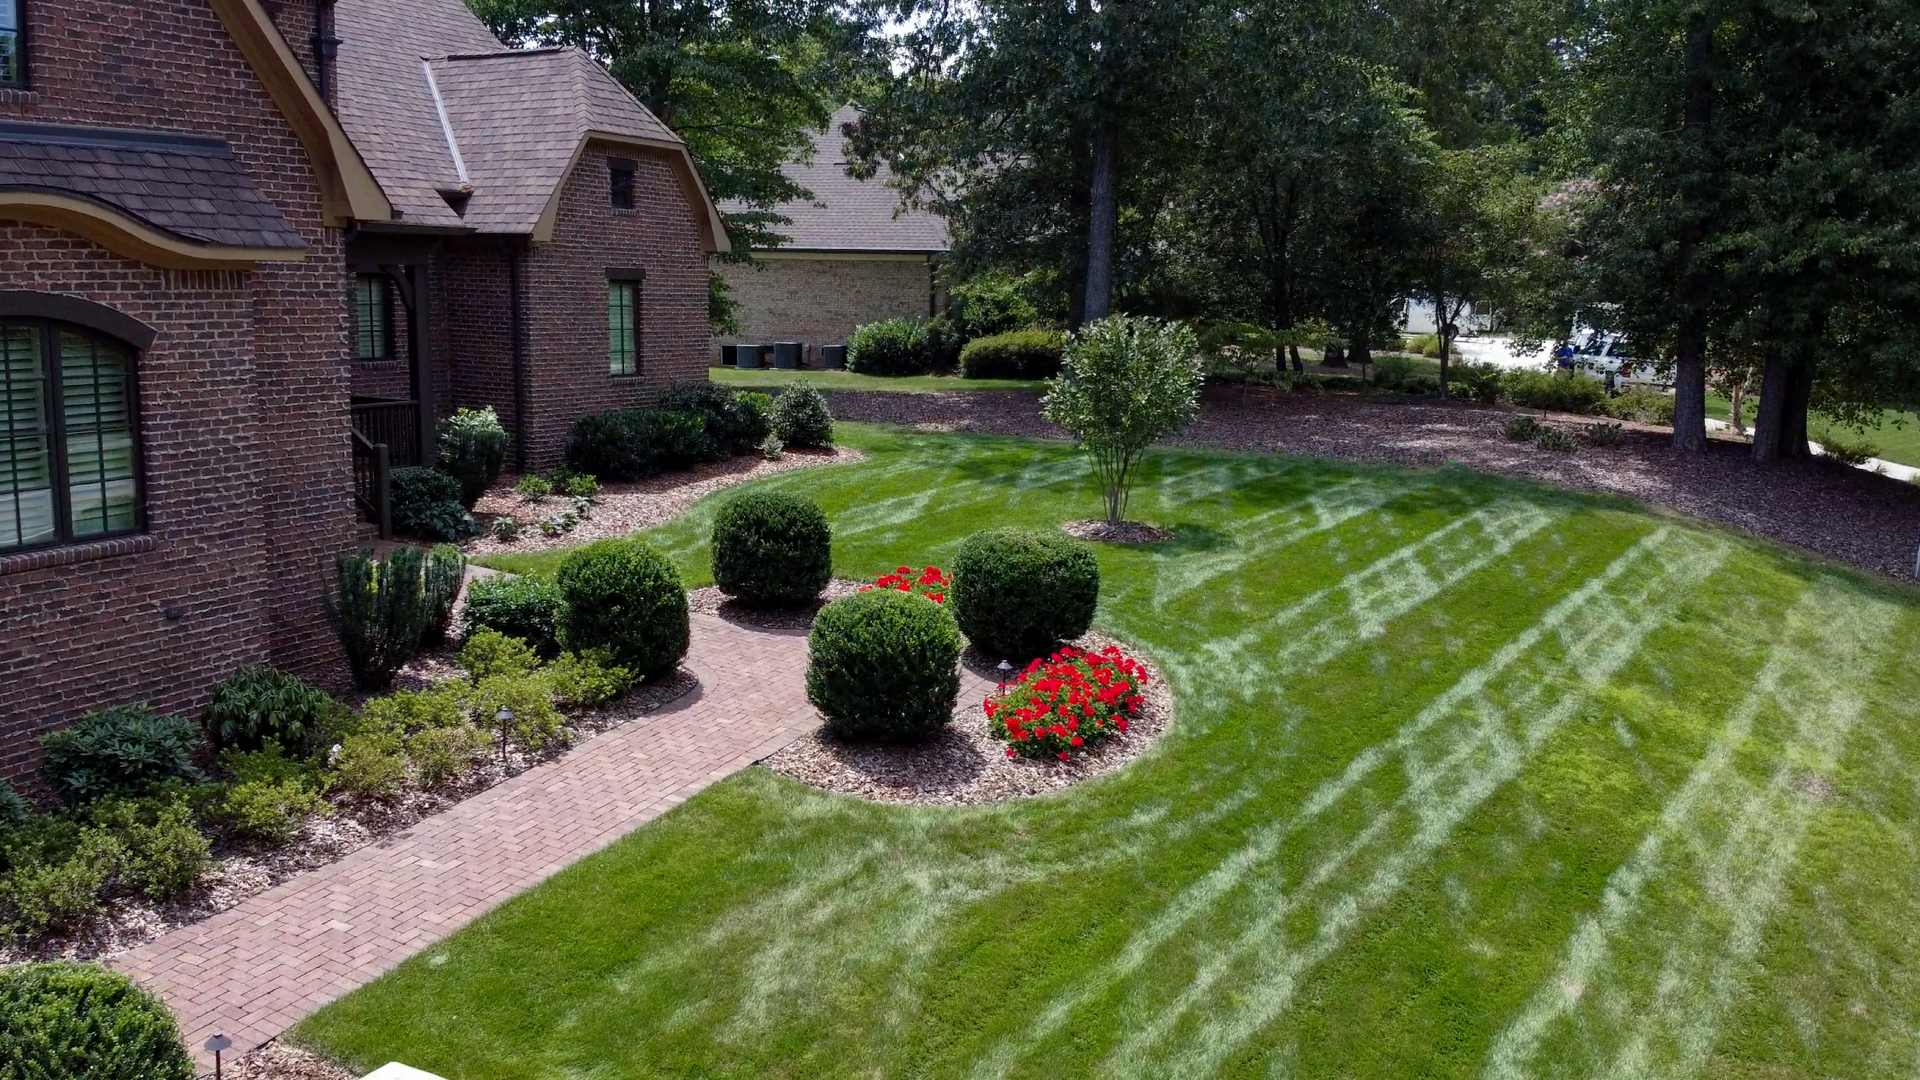 Freshly mowed lawn with pattern in Winston-Salem, NC.